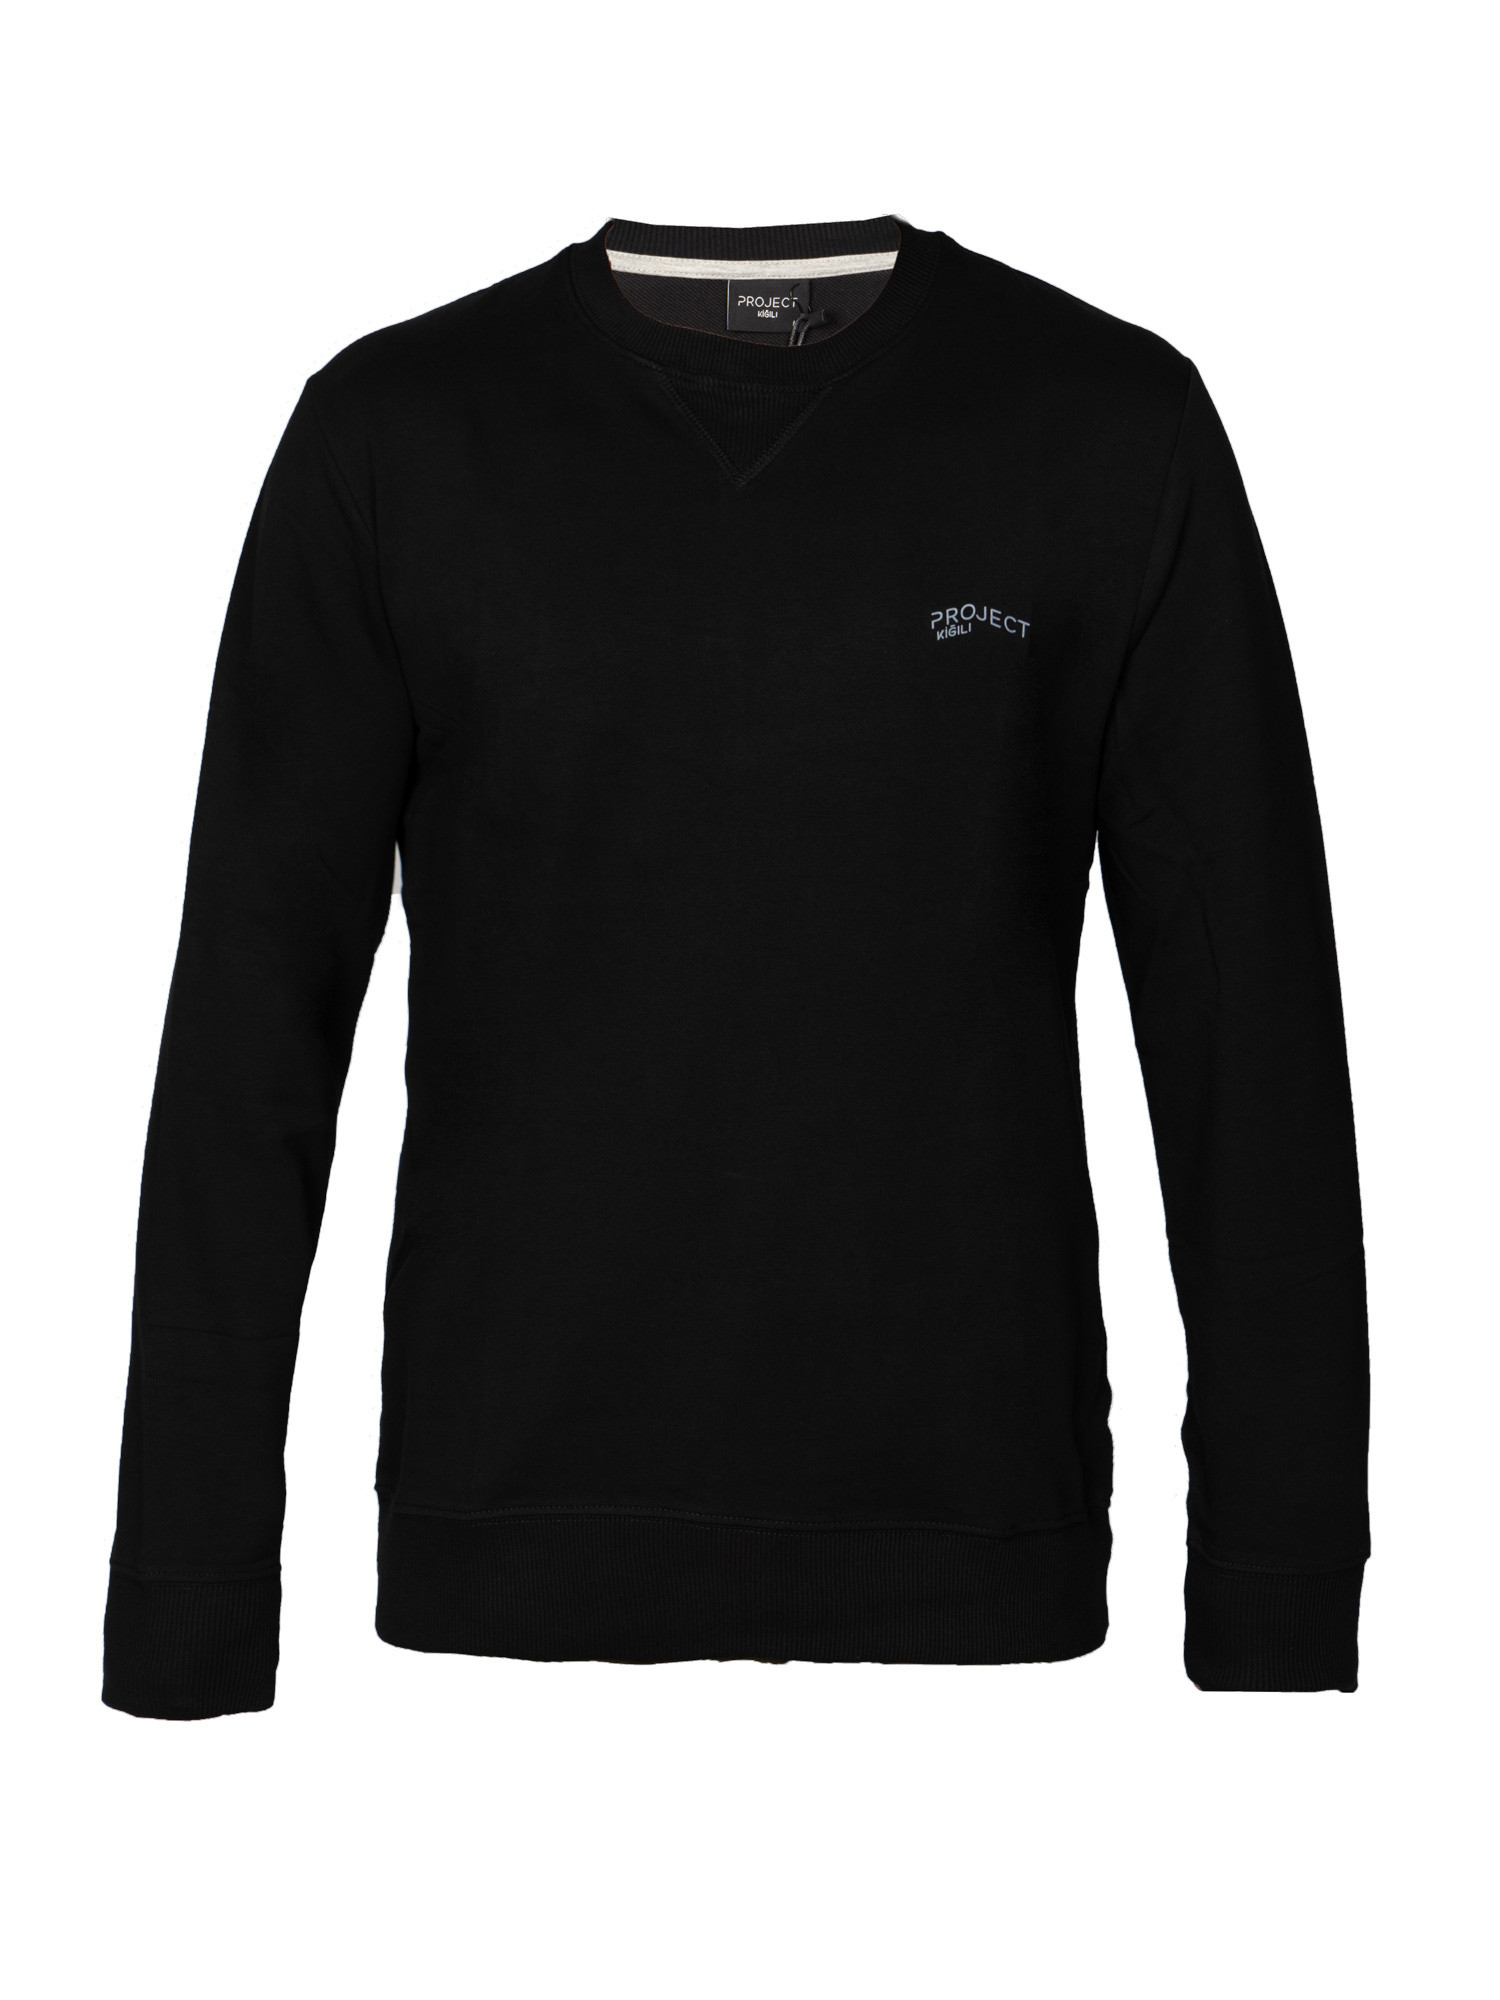 Project sweatshirt, Black, large image number 0